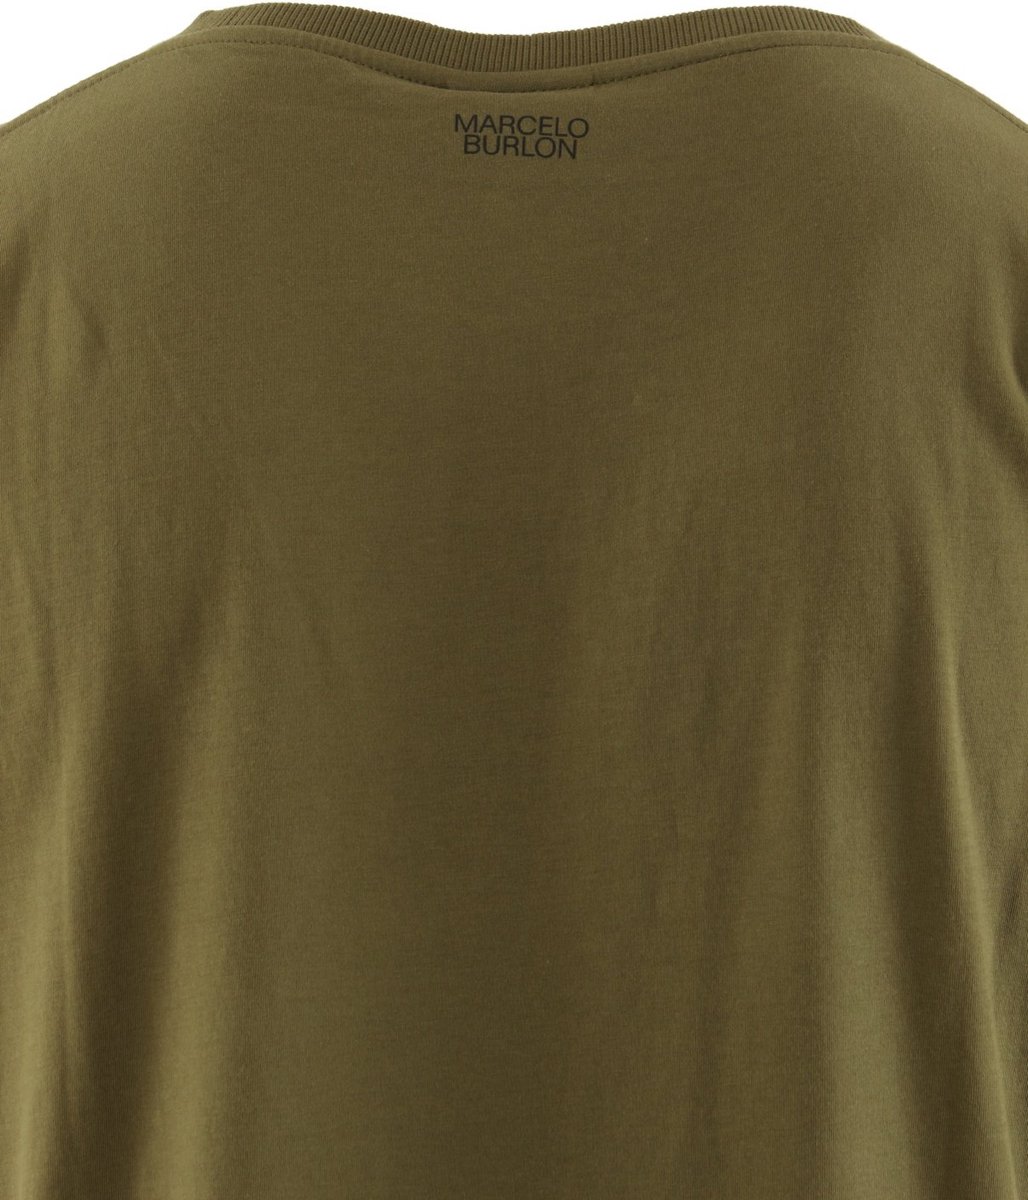 Marcelo Burlon T-shirt maat XL